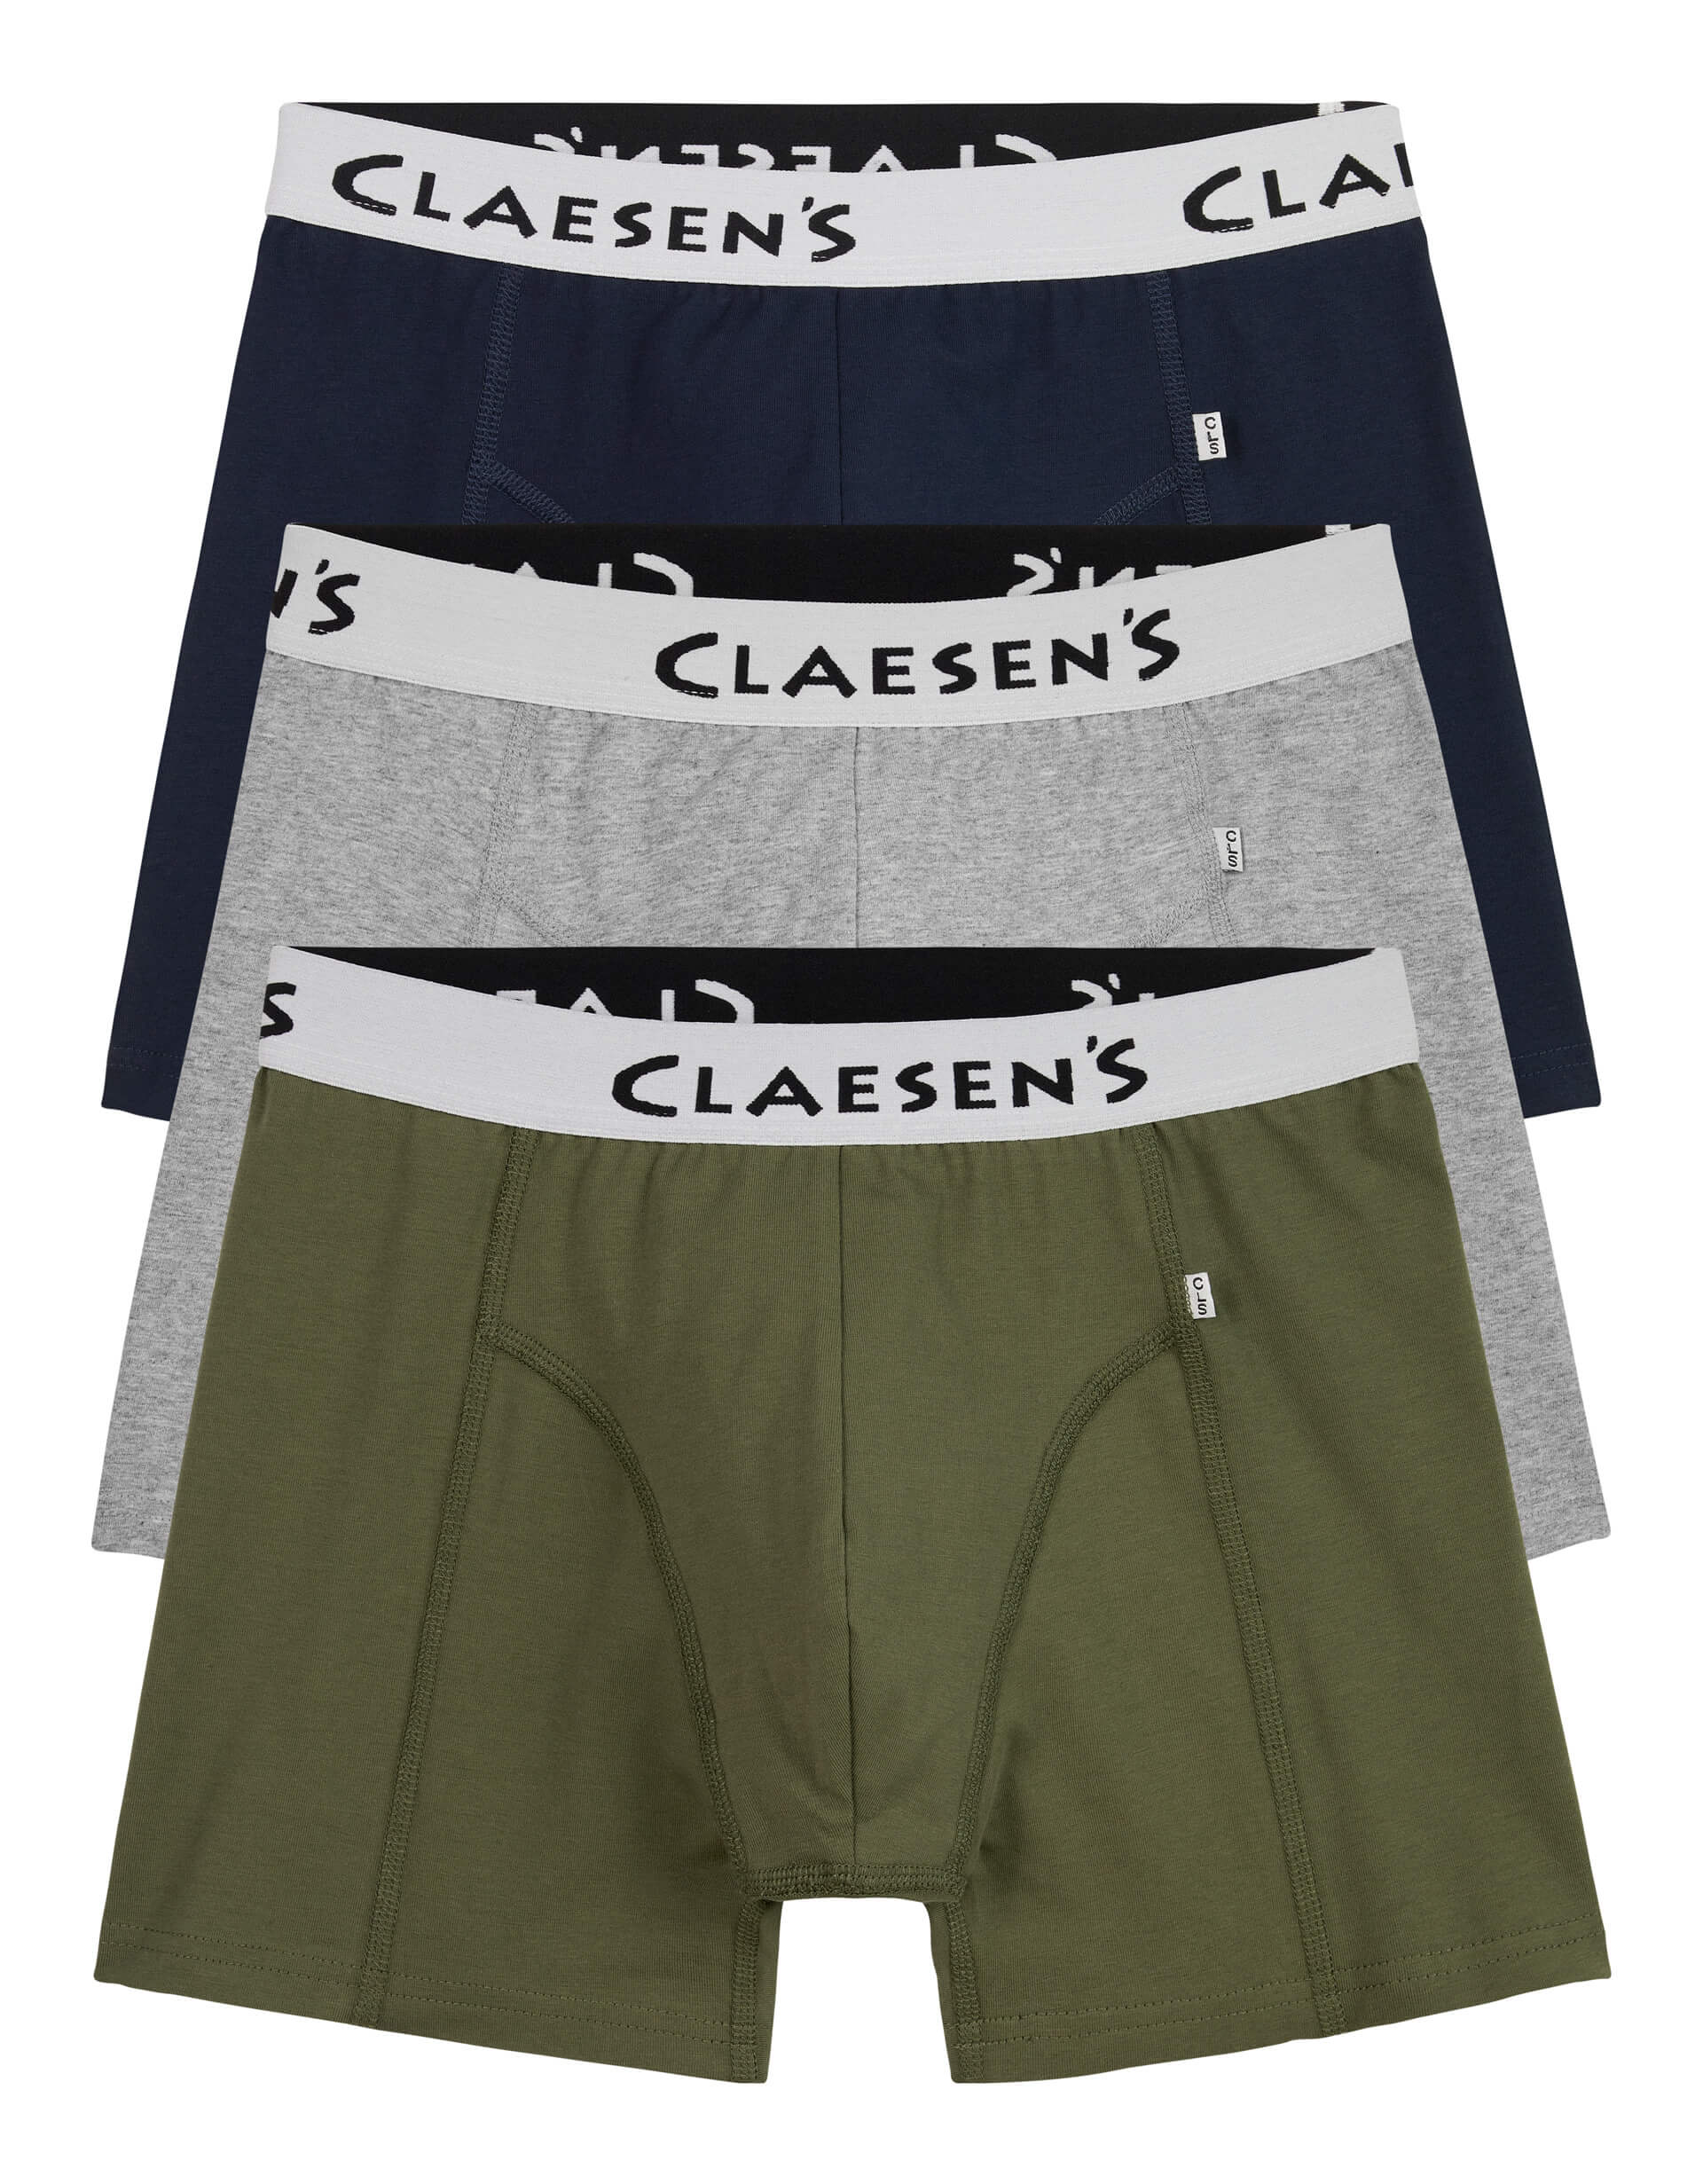 Claesen's Basics normale lengte boxer (3-pack), heren boxer, grijs, groen, blauw